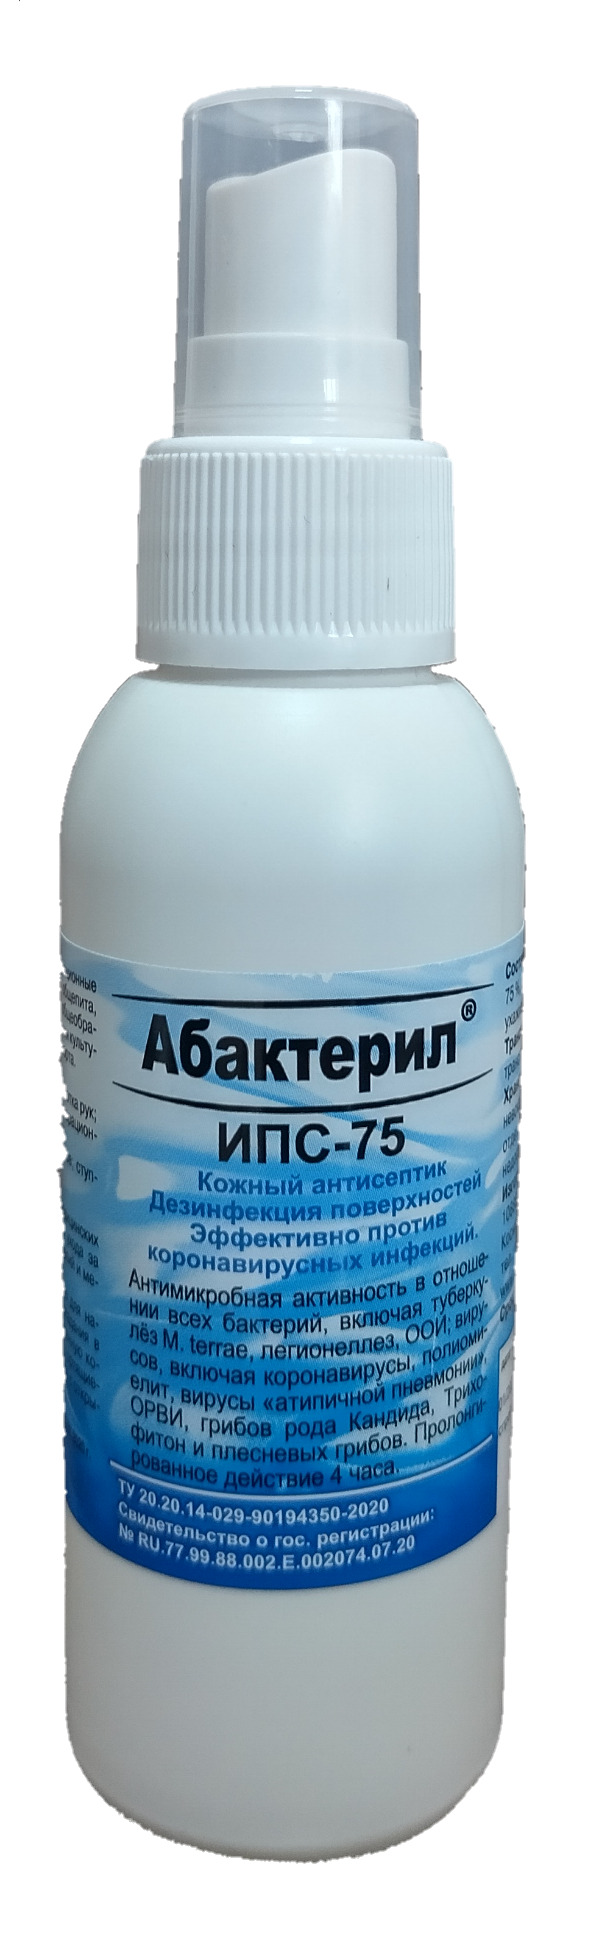 Кожный антисептик Абактерил-ИПС-75 100 мл спрей 1 шт